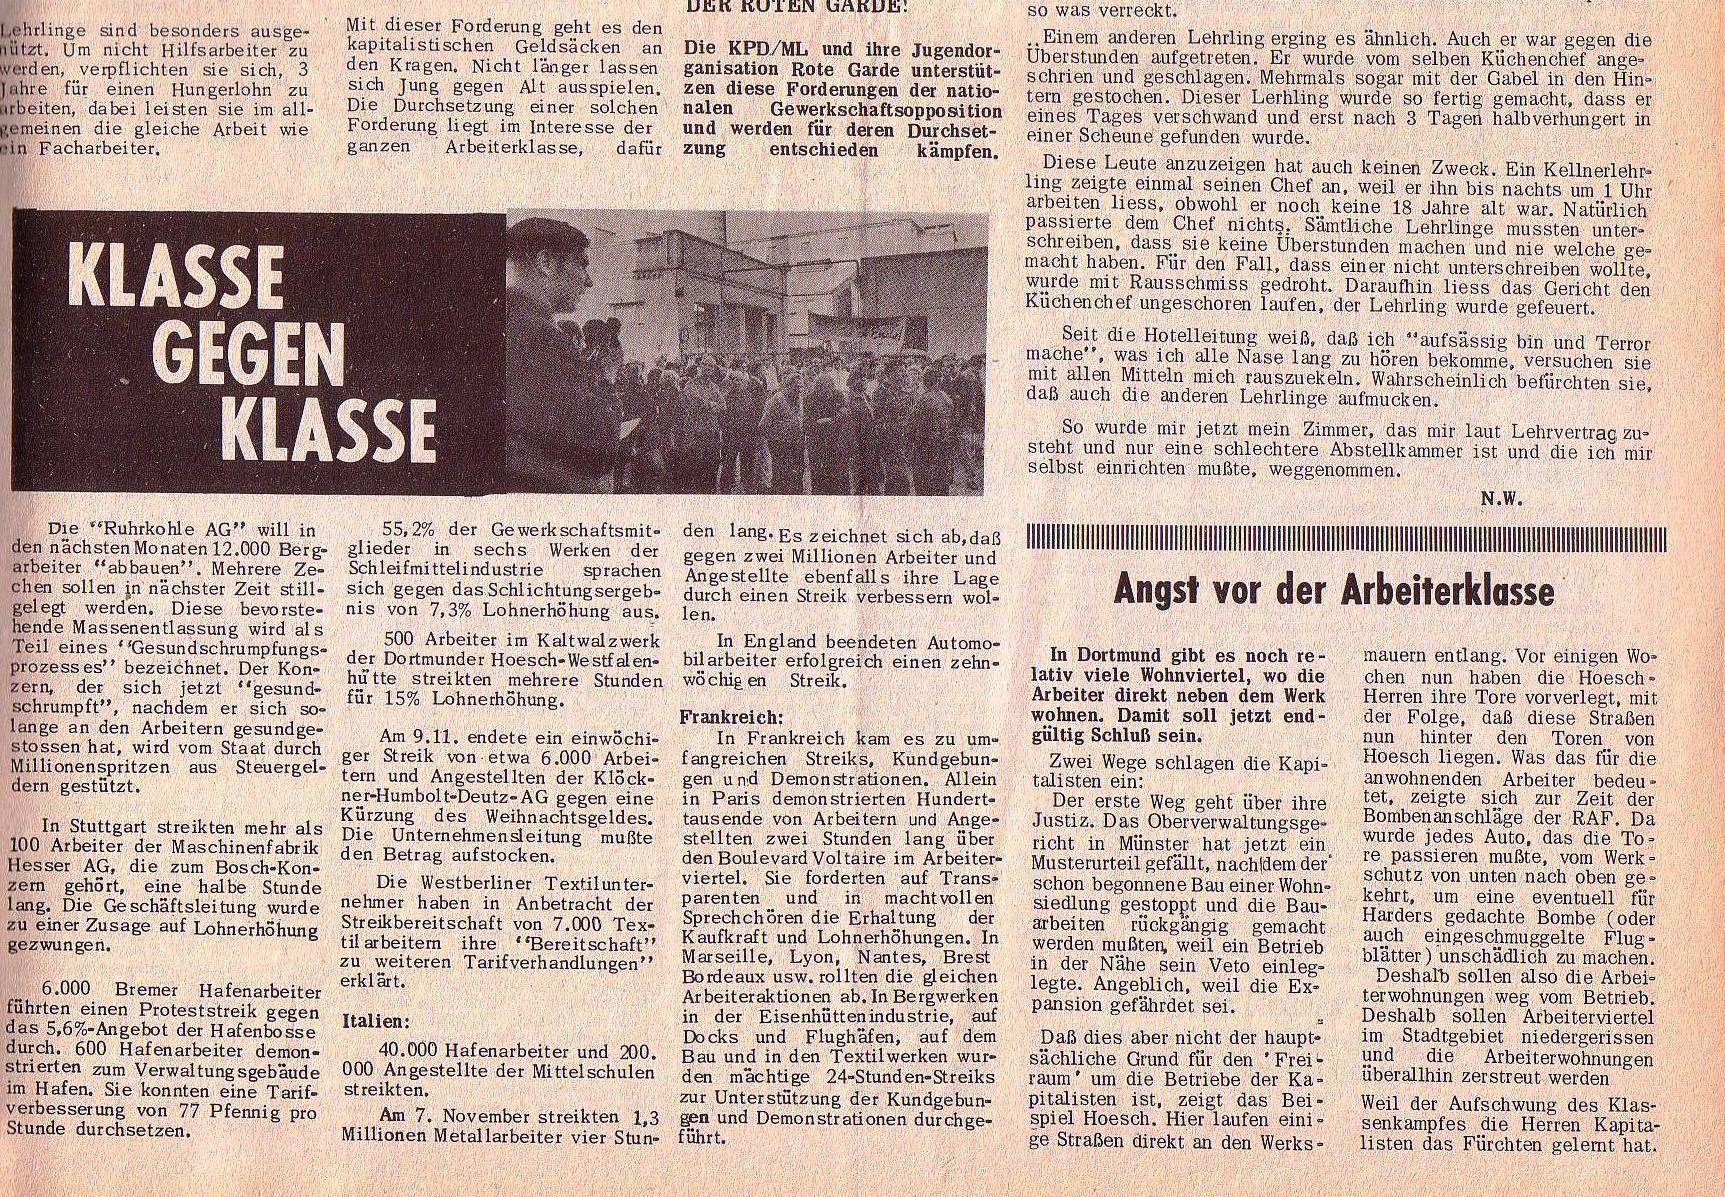 Roter Morgen, 6. Jg., 20. November 1972, Nr. 23, Seite 3b